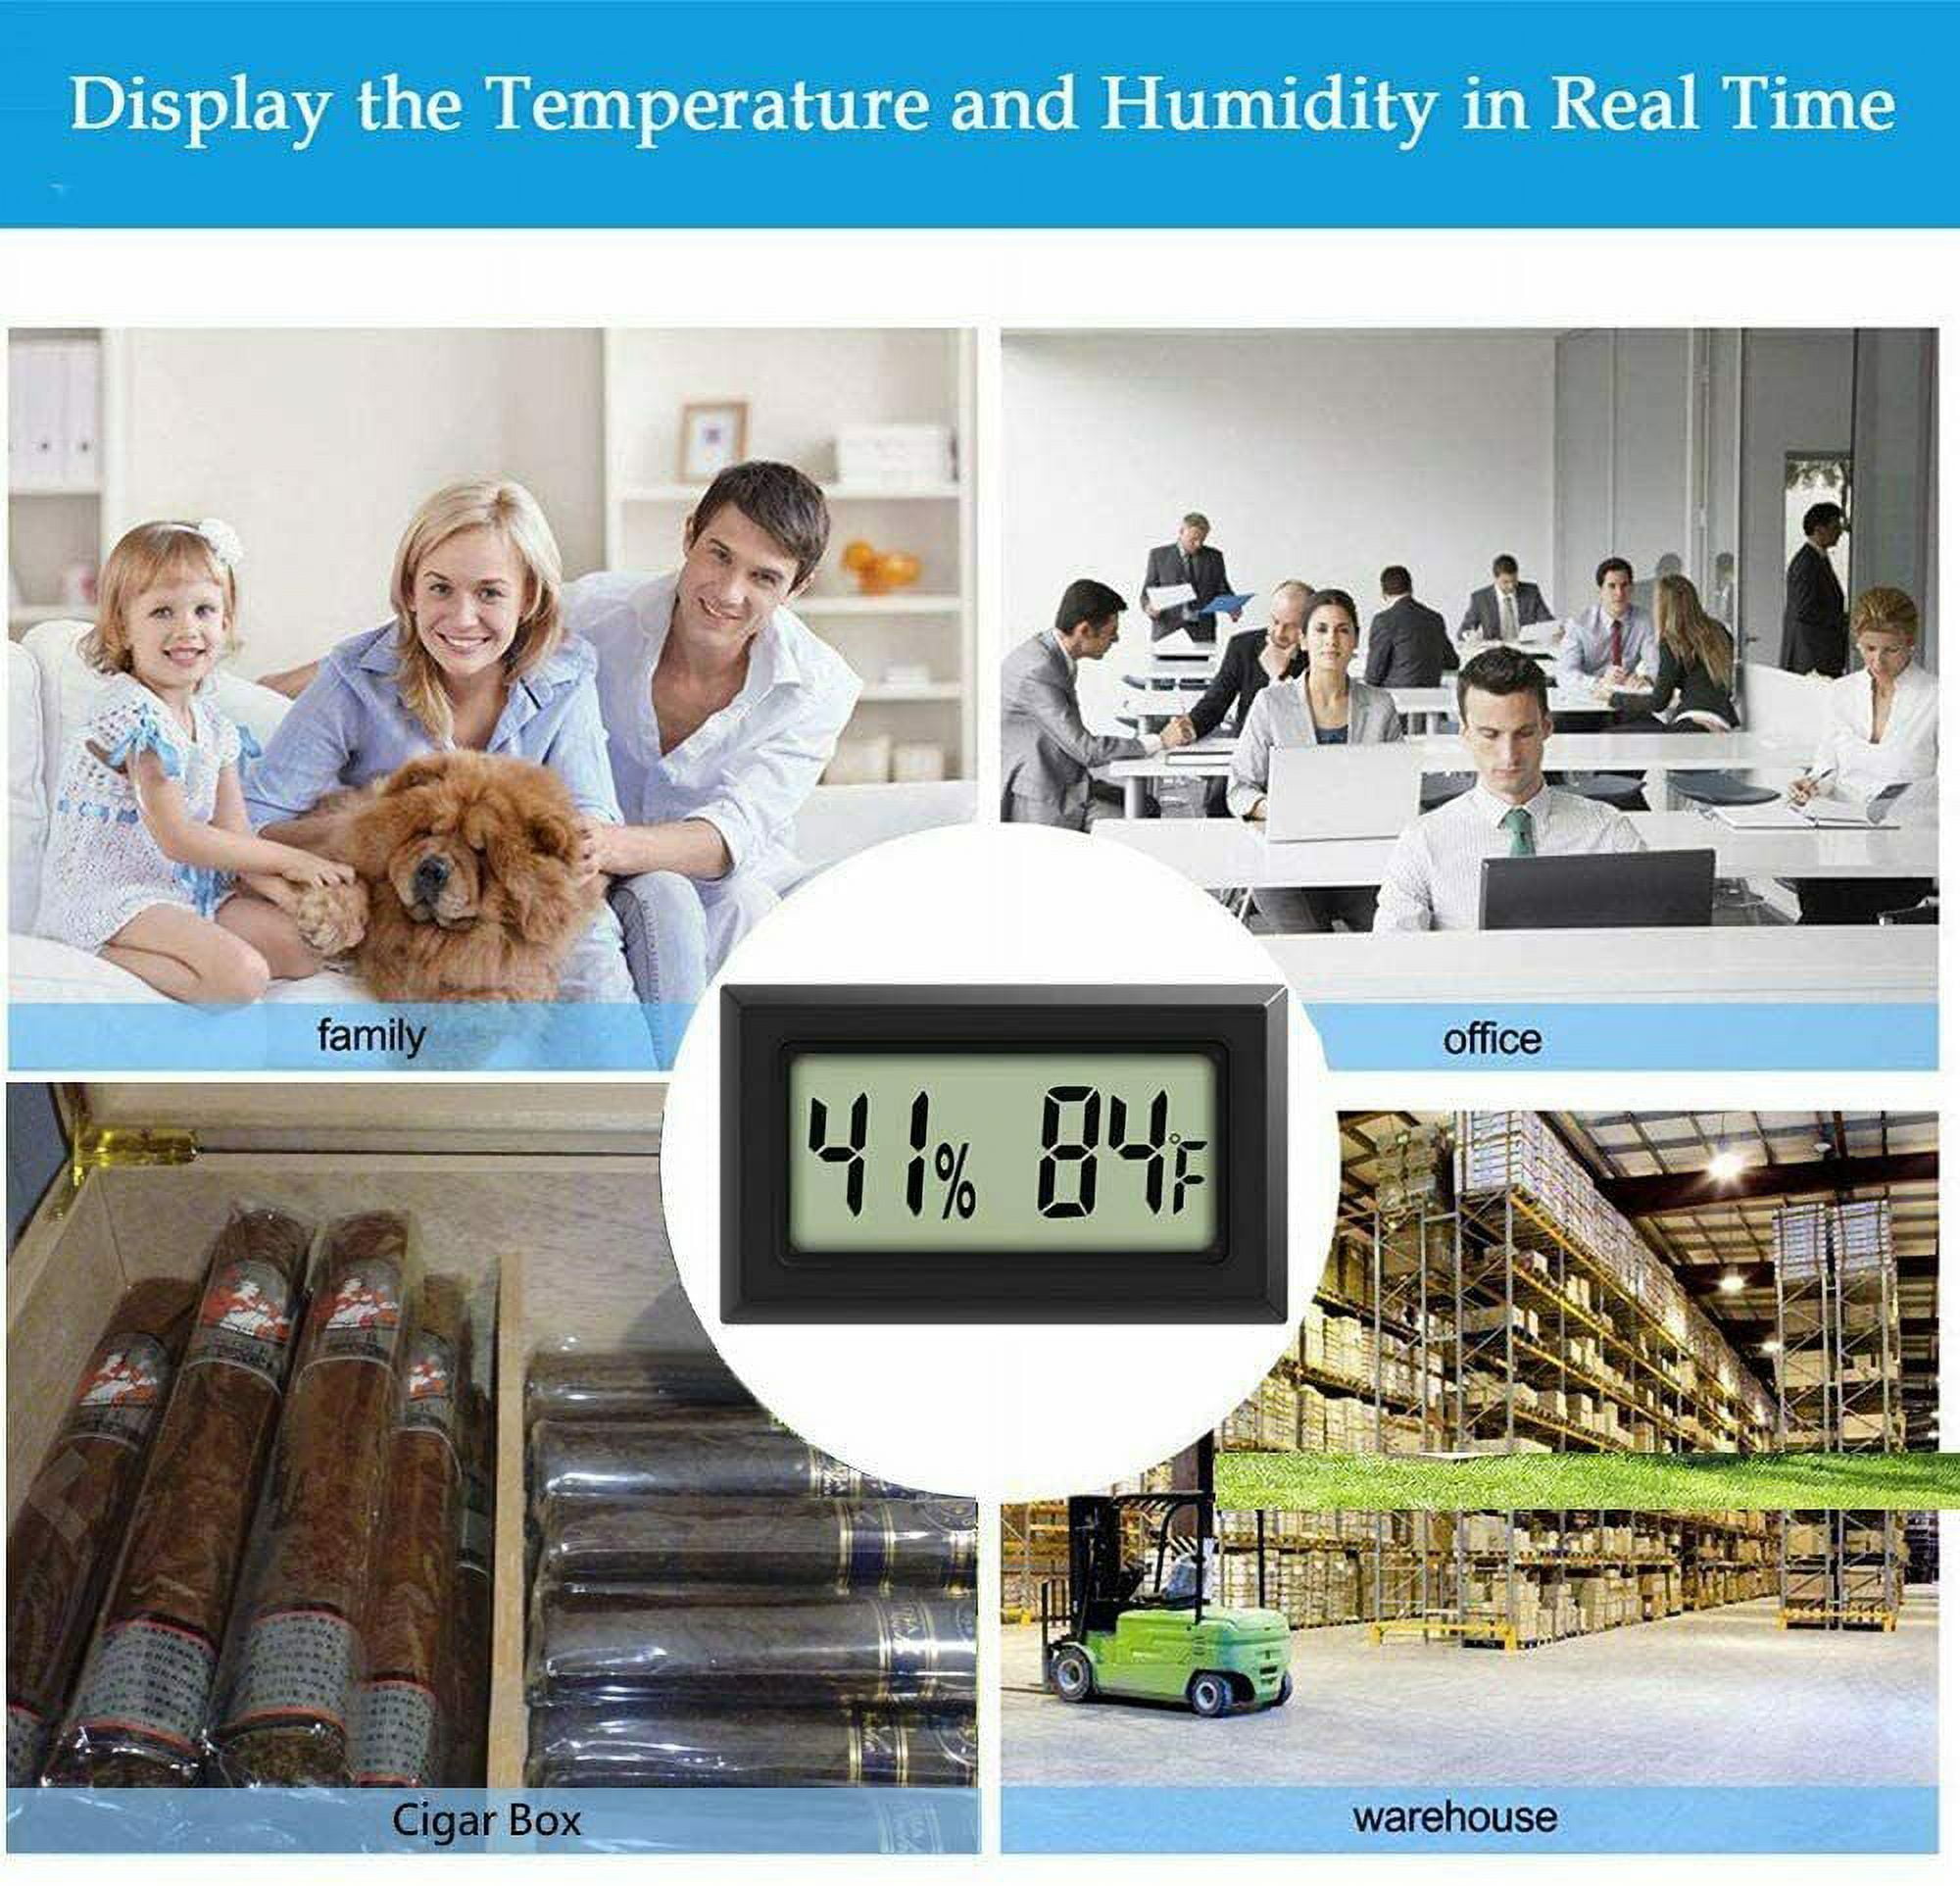 CHICIRIS 2PCS Mini Digital LCD Thermometer Hygrometer Round Shape